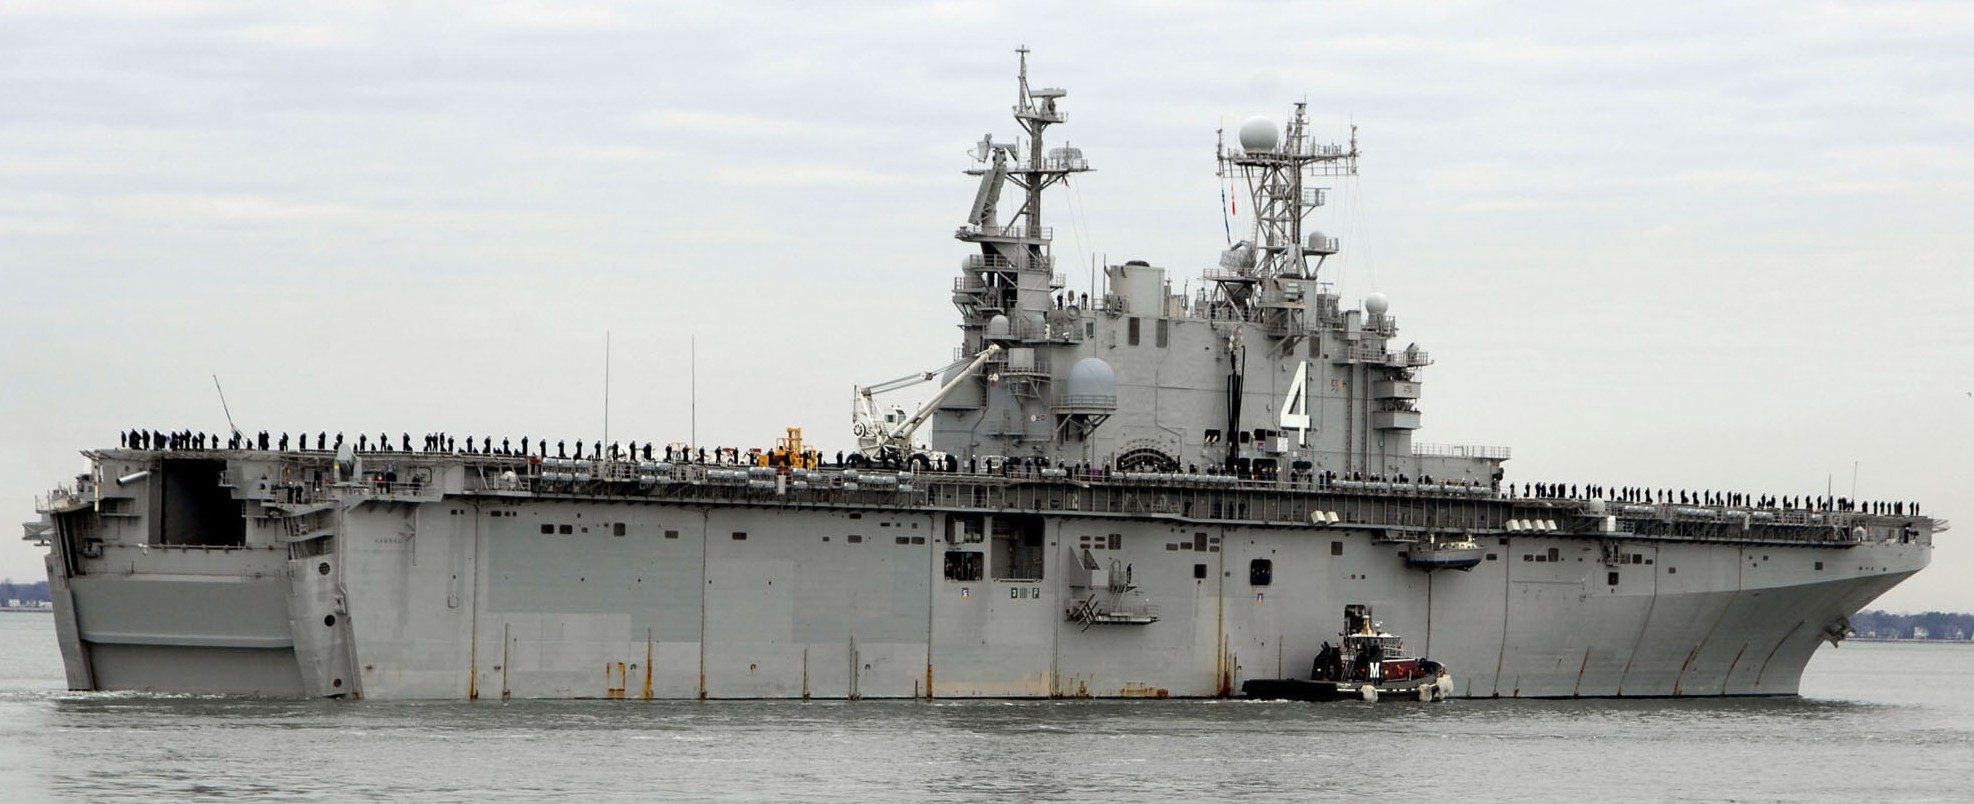 lha-4 uss nassau tarawa class amphibious assault ship us navy 24